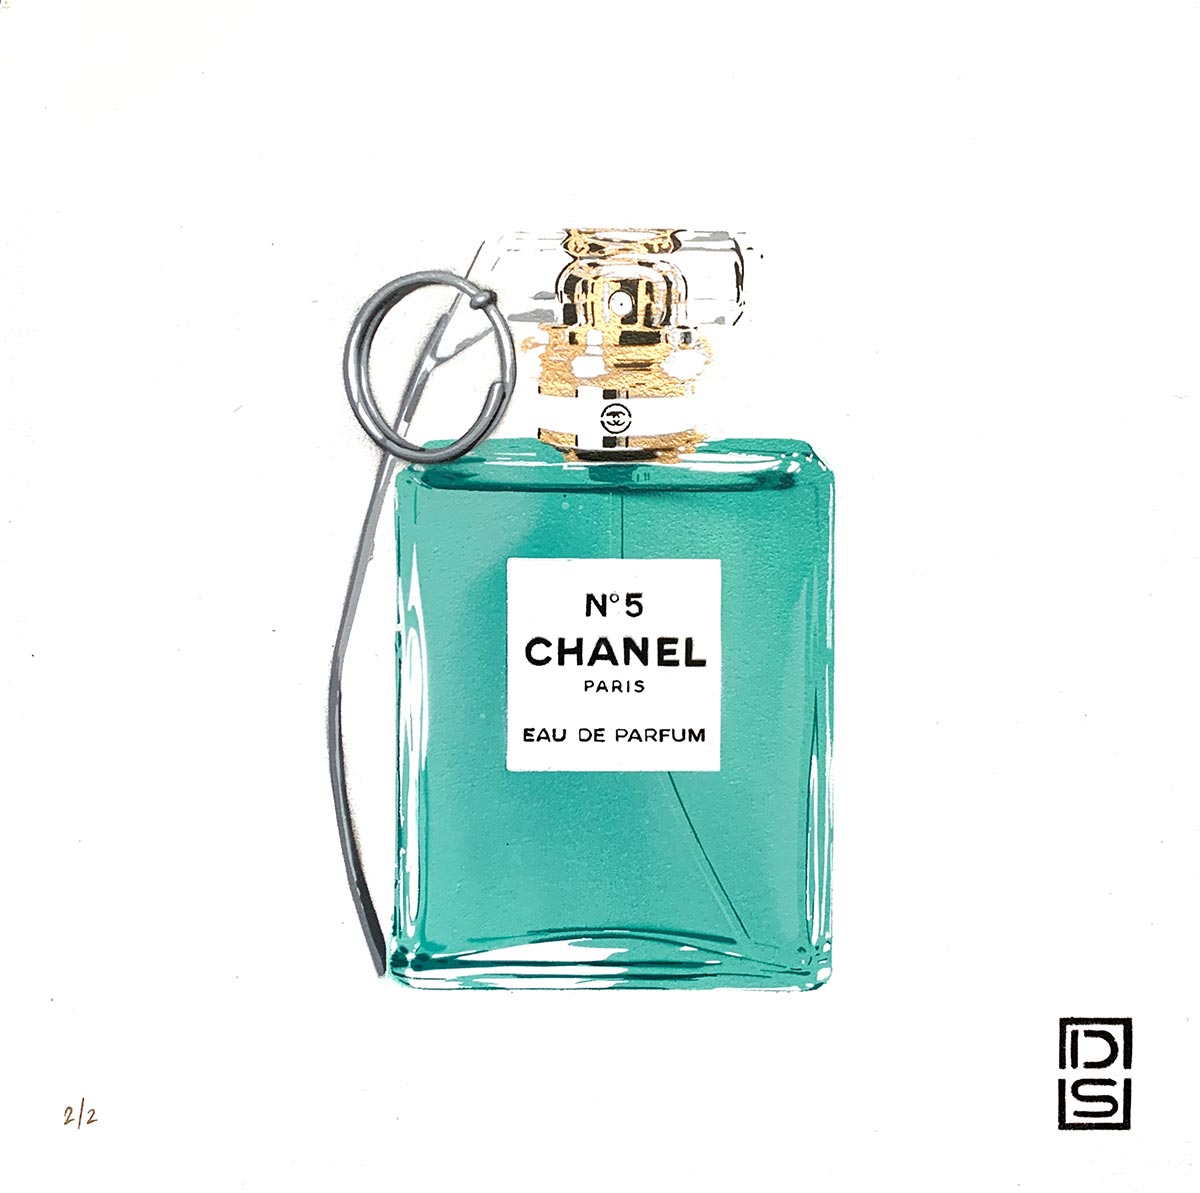 Chanel turquoise